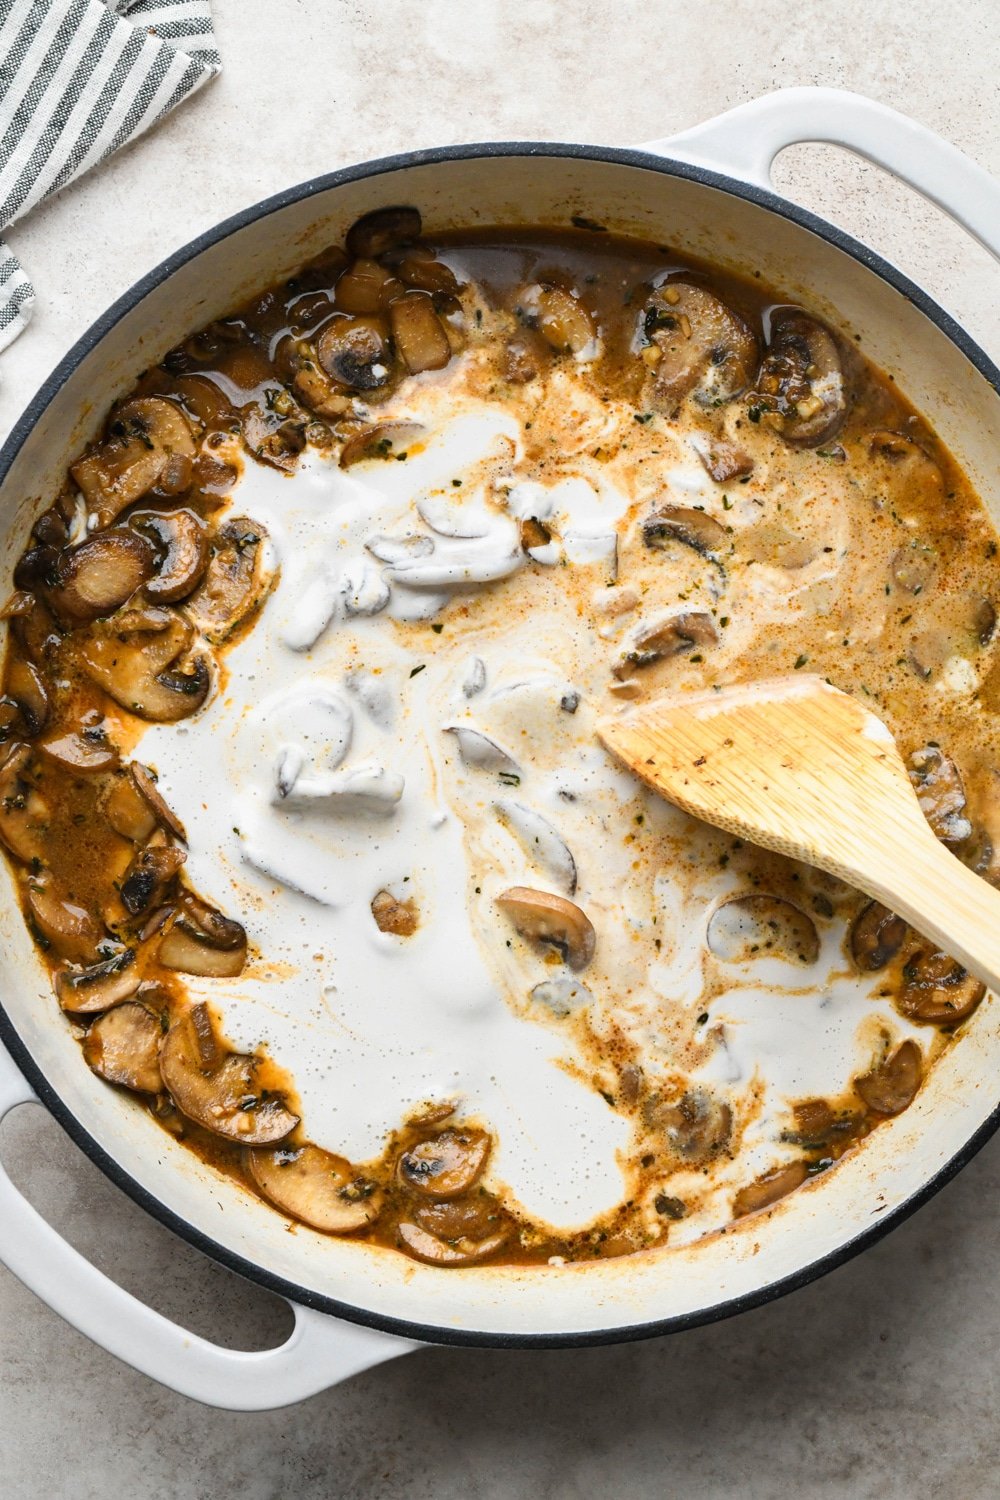 How to make Gluten Free Mushroom Gravy: Stirring cashew cream into skillet with mushrooms and broth.